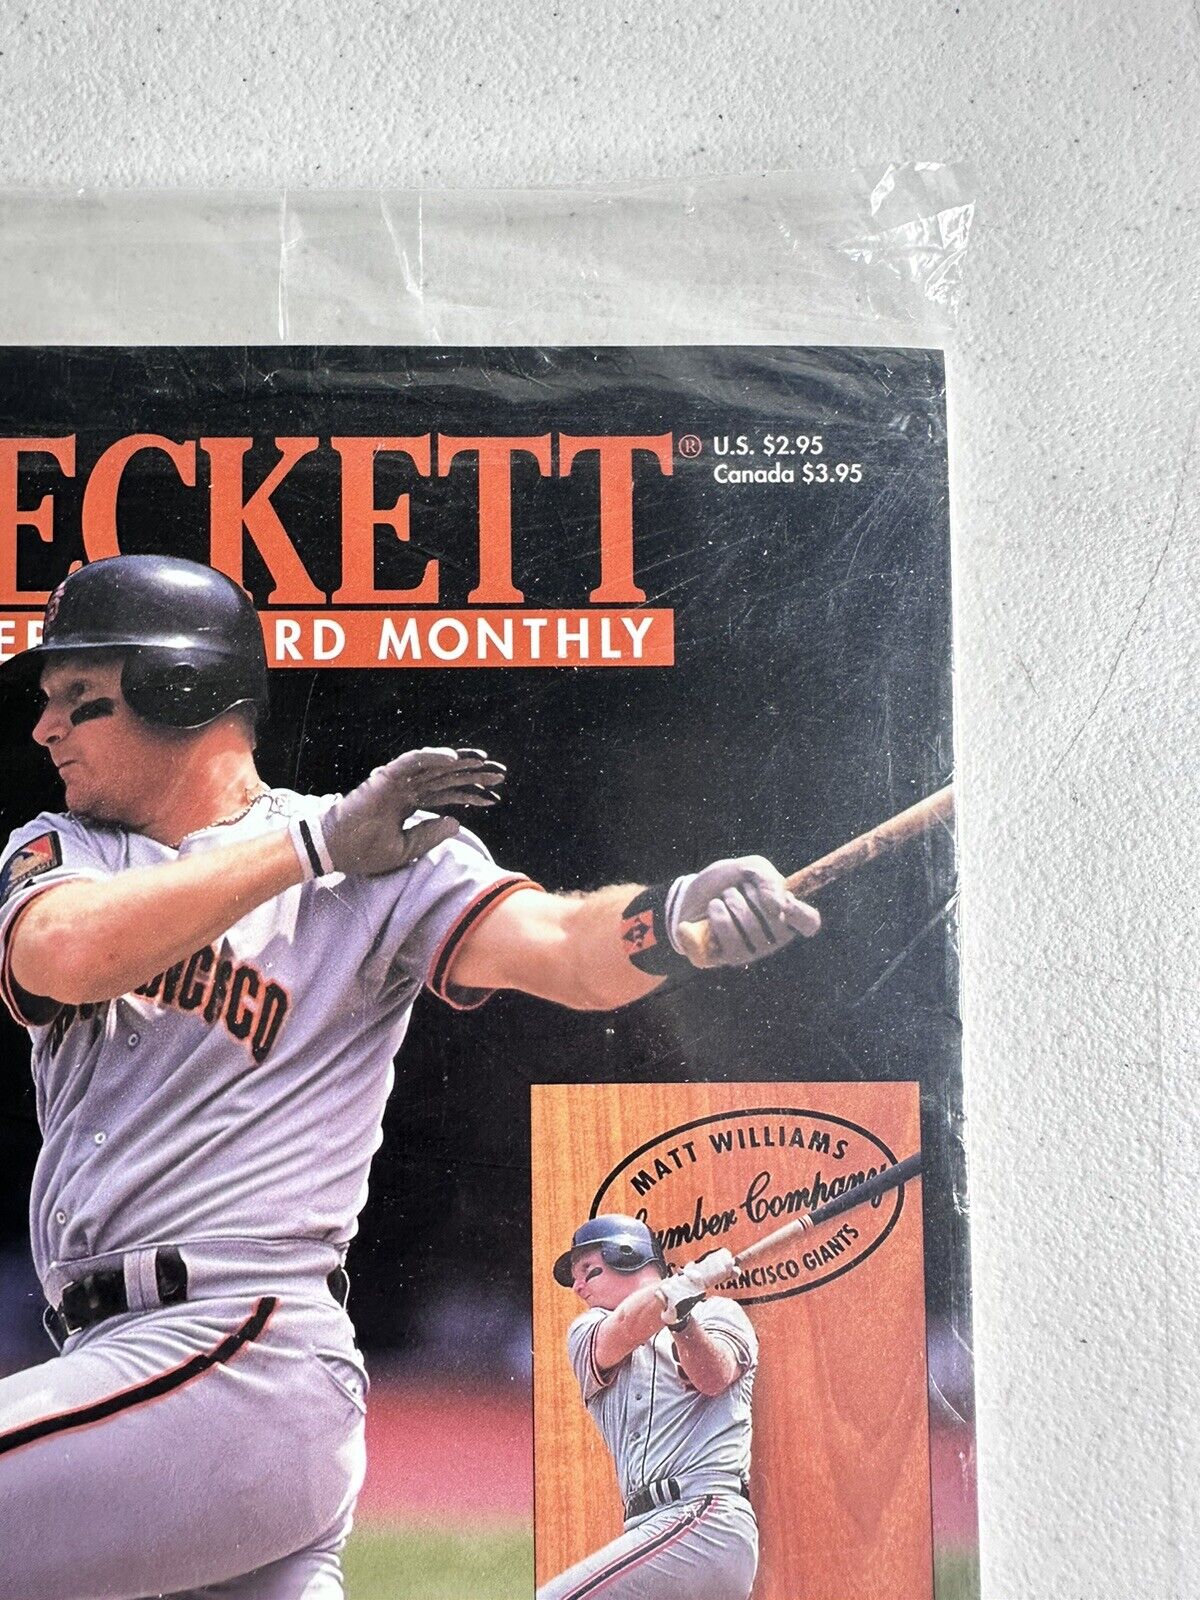 Sealed New 1994 Beckett Baseball Magazine Featuring Matt Williams - San Francisco Giants Issue No. 115 - Rare Vintage Collectible - TreasuTiques